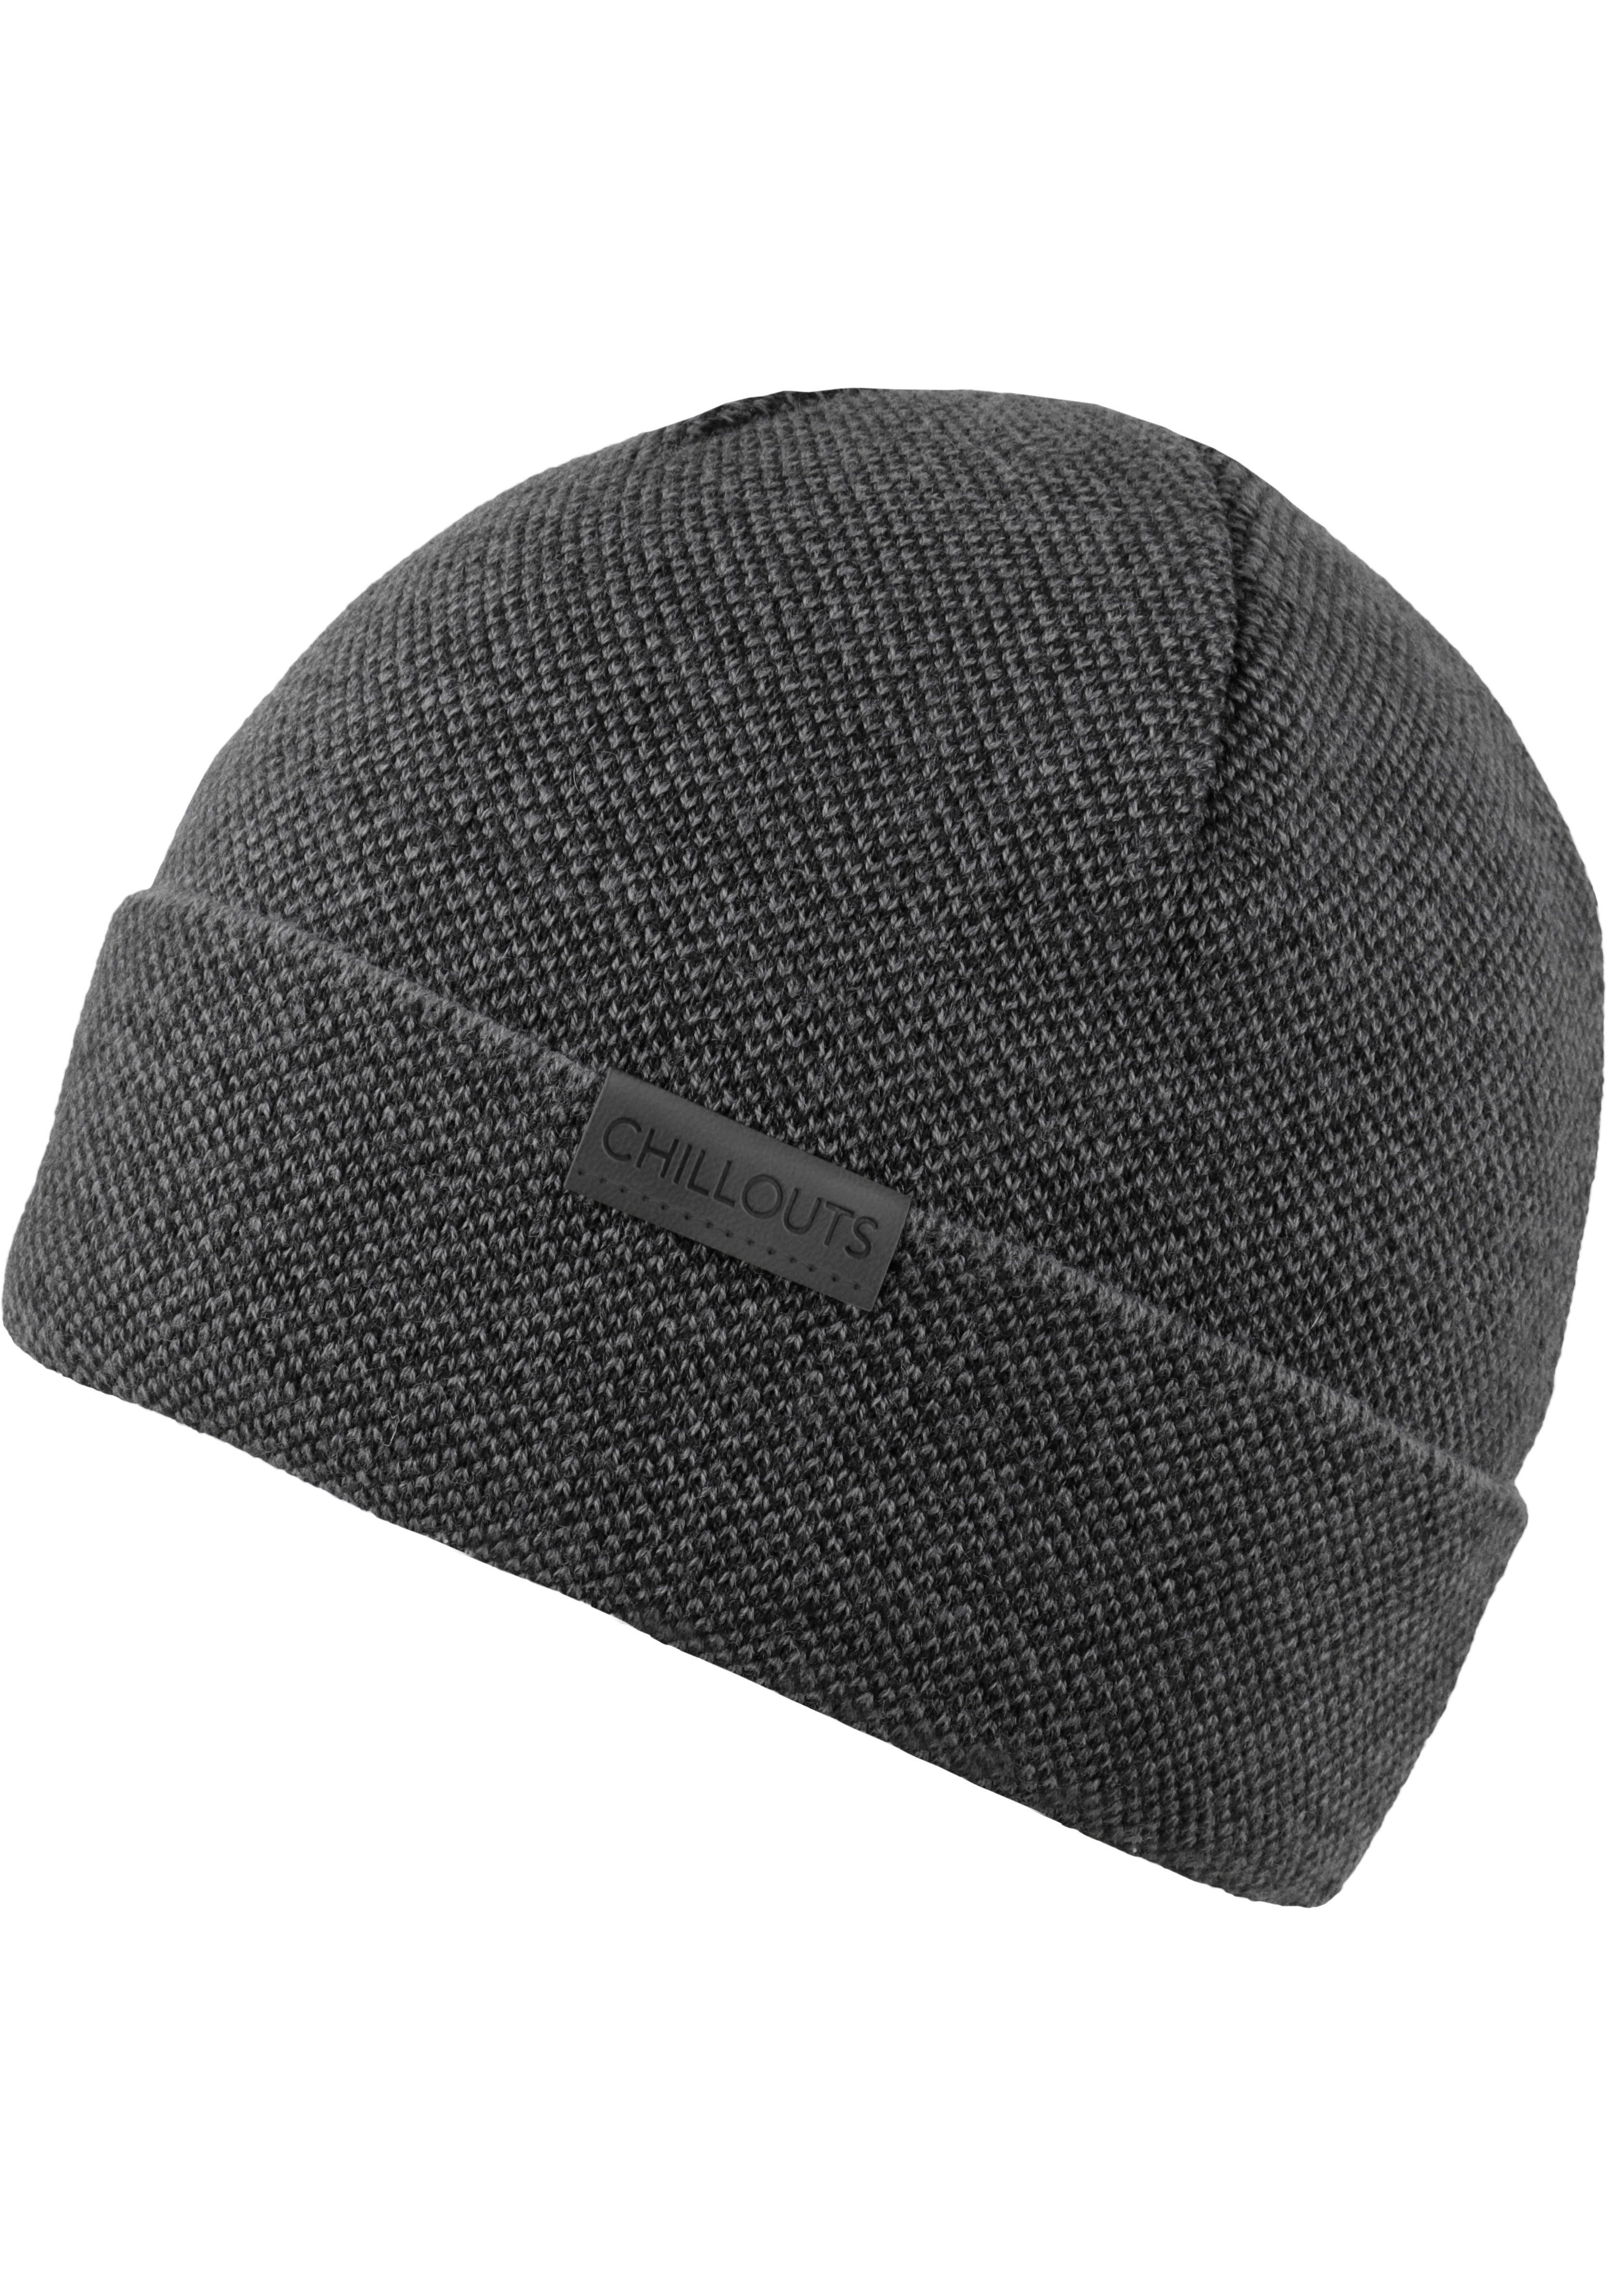 chillouts Strickmütze Kilian Hat dark grey